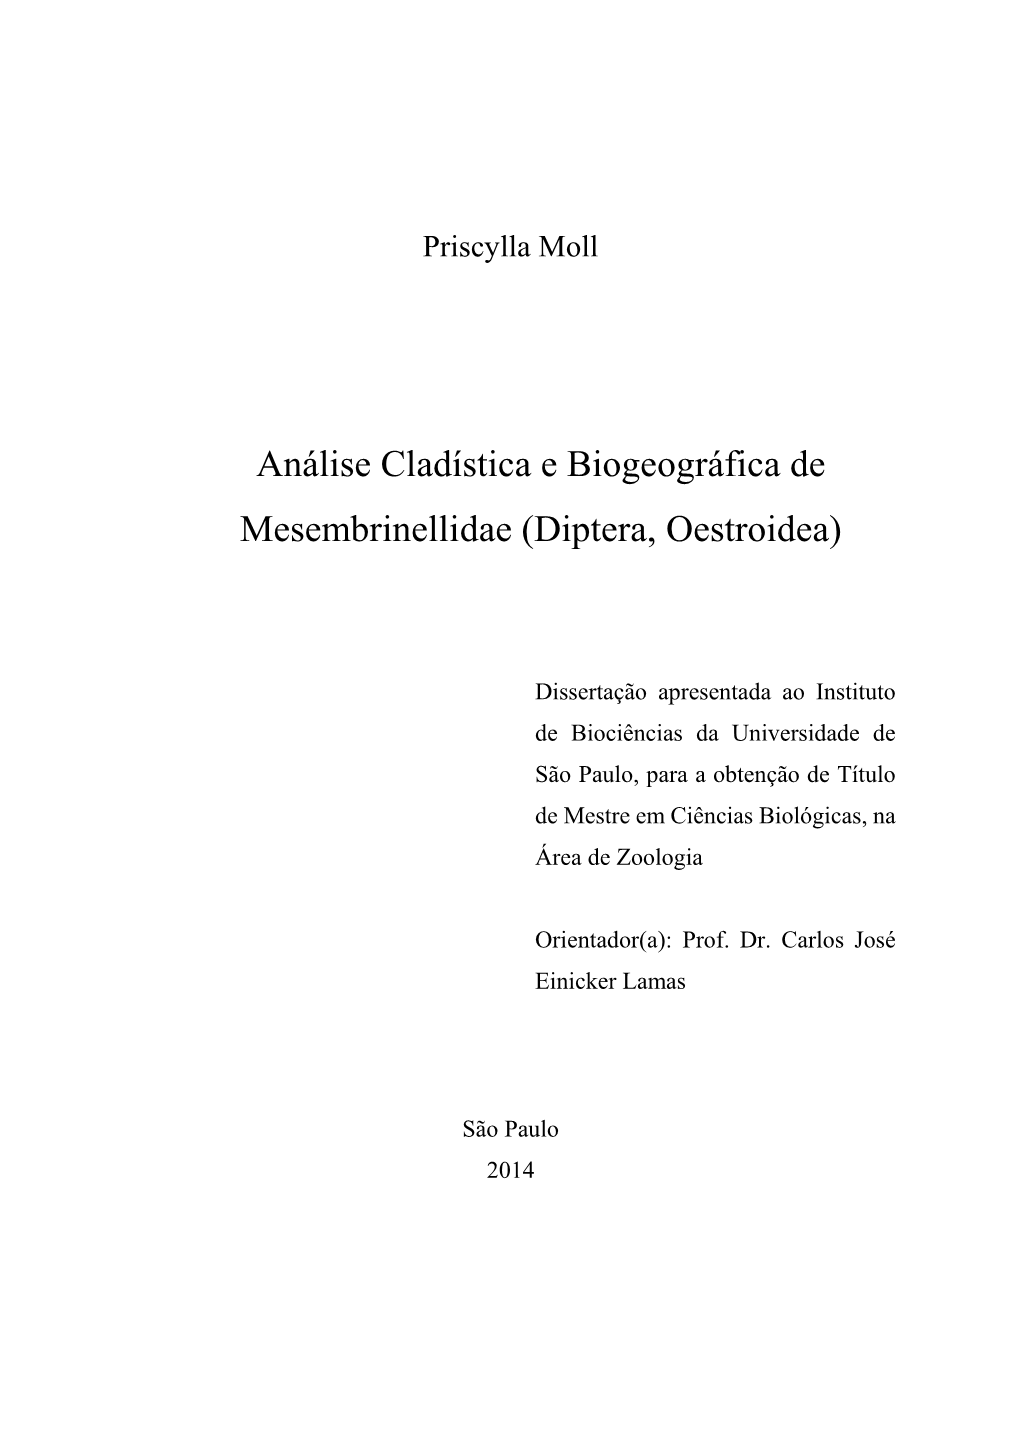 Análise Cladística E Biogeográfica De Mesembrinellidae (Diptera, Oestroidea)